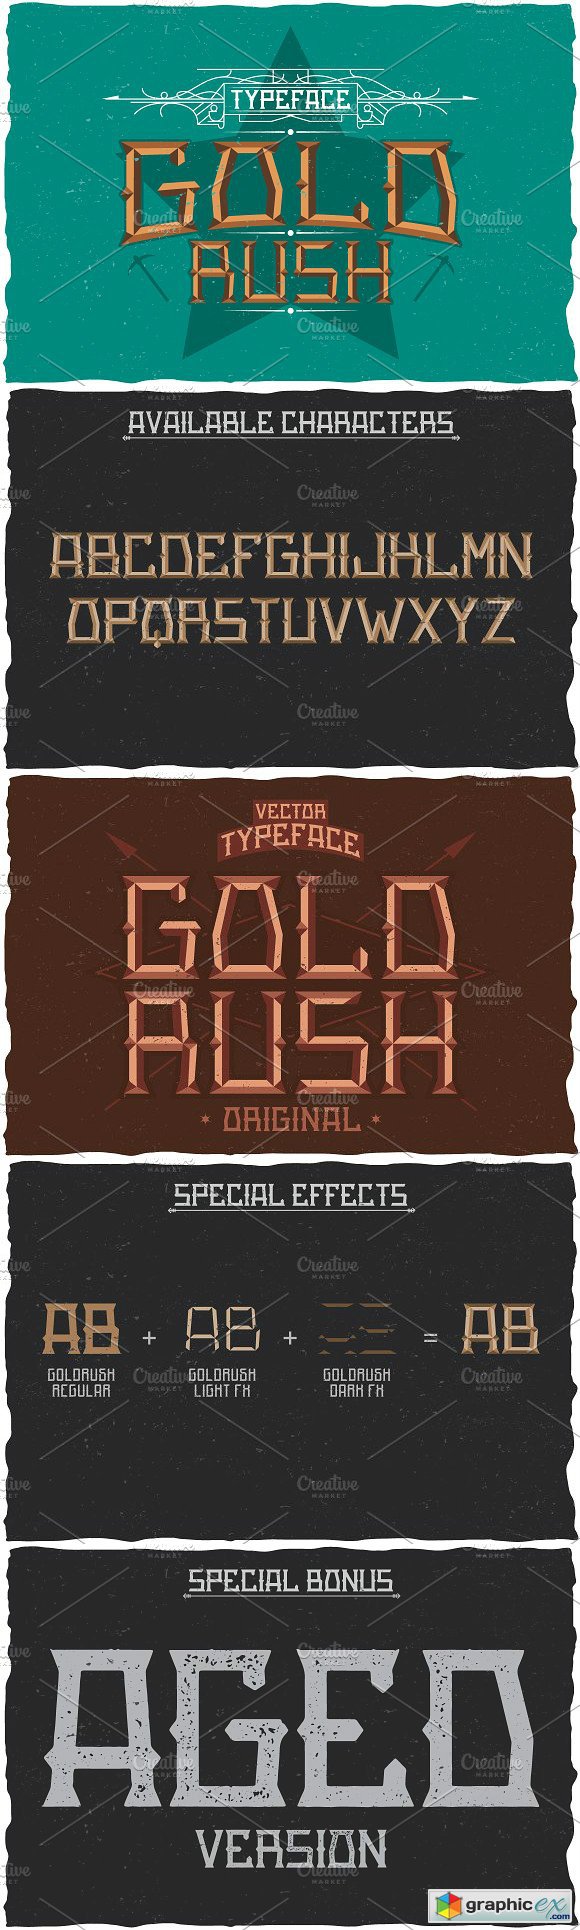 Gold Rush Label Typeface